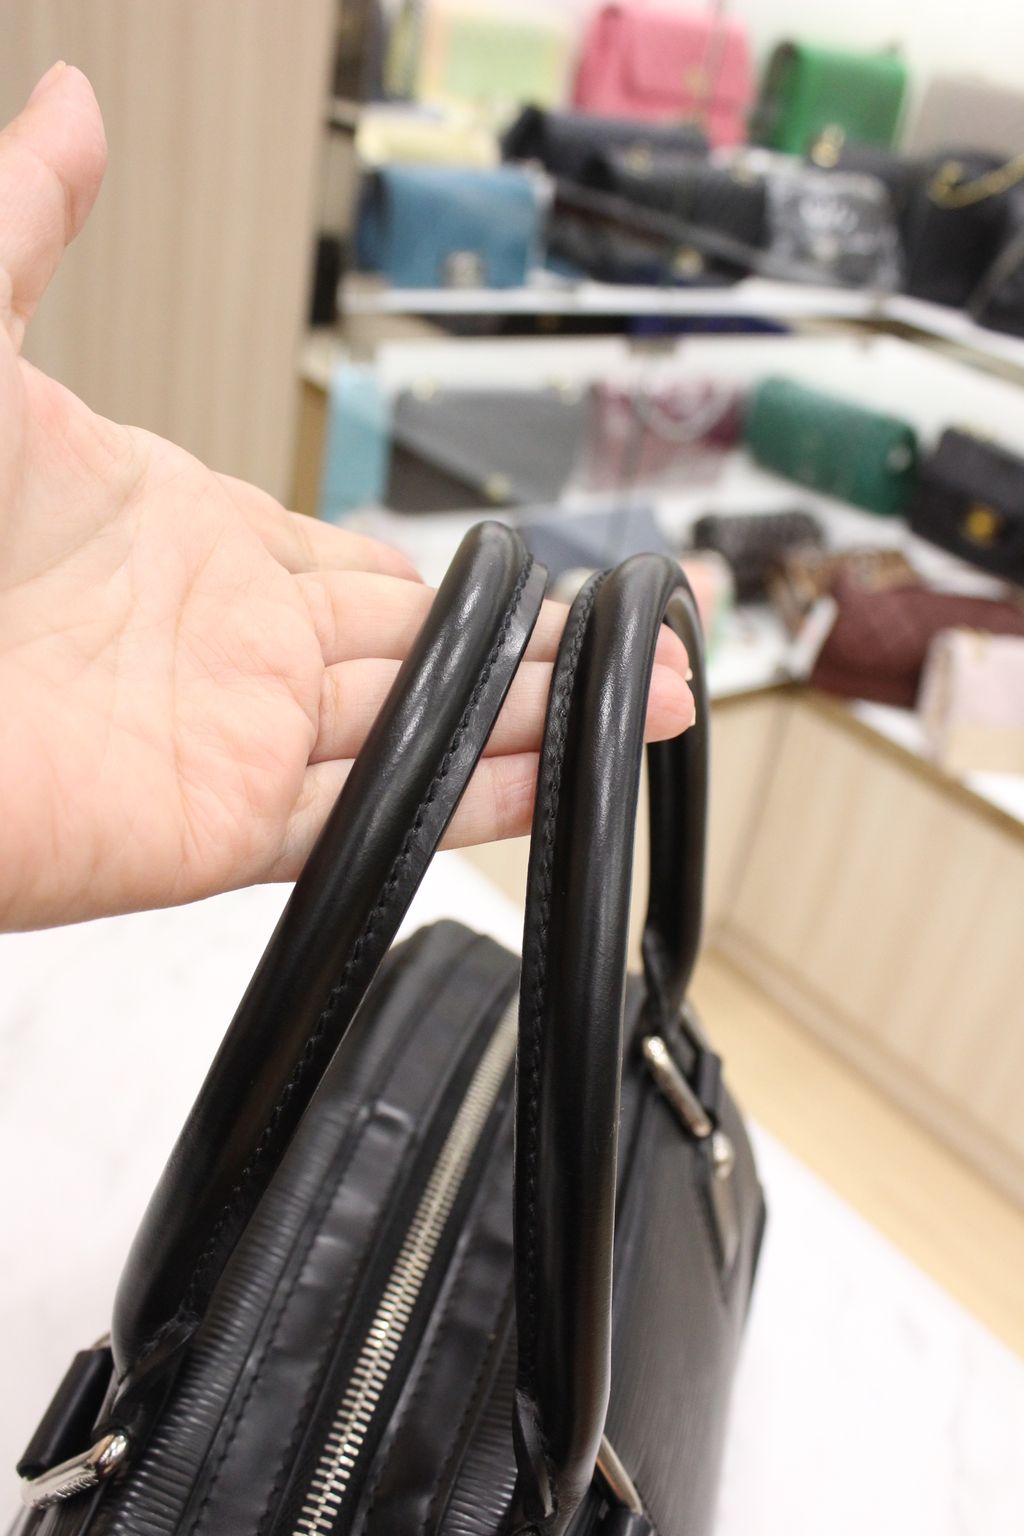 Louis Vuitton Black Epi Bowling Montaigne Handbag